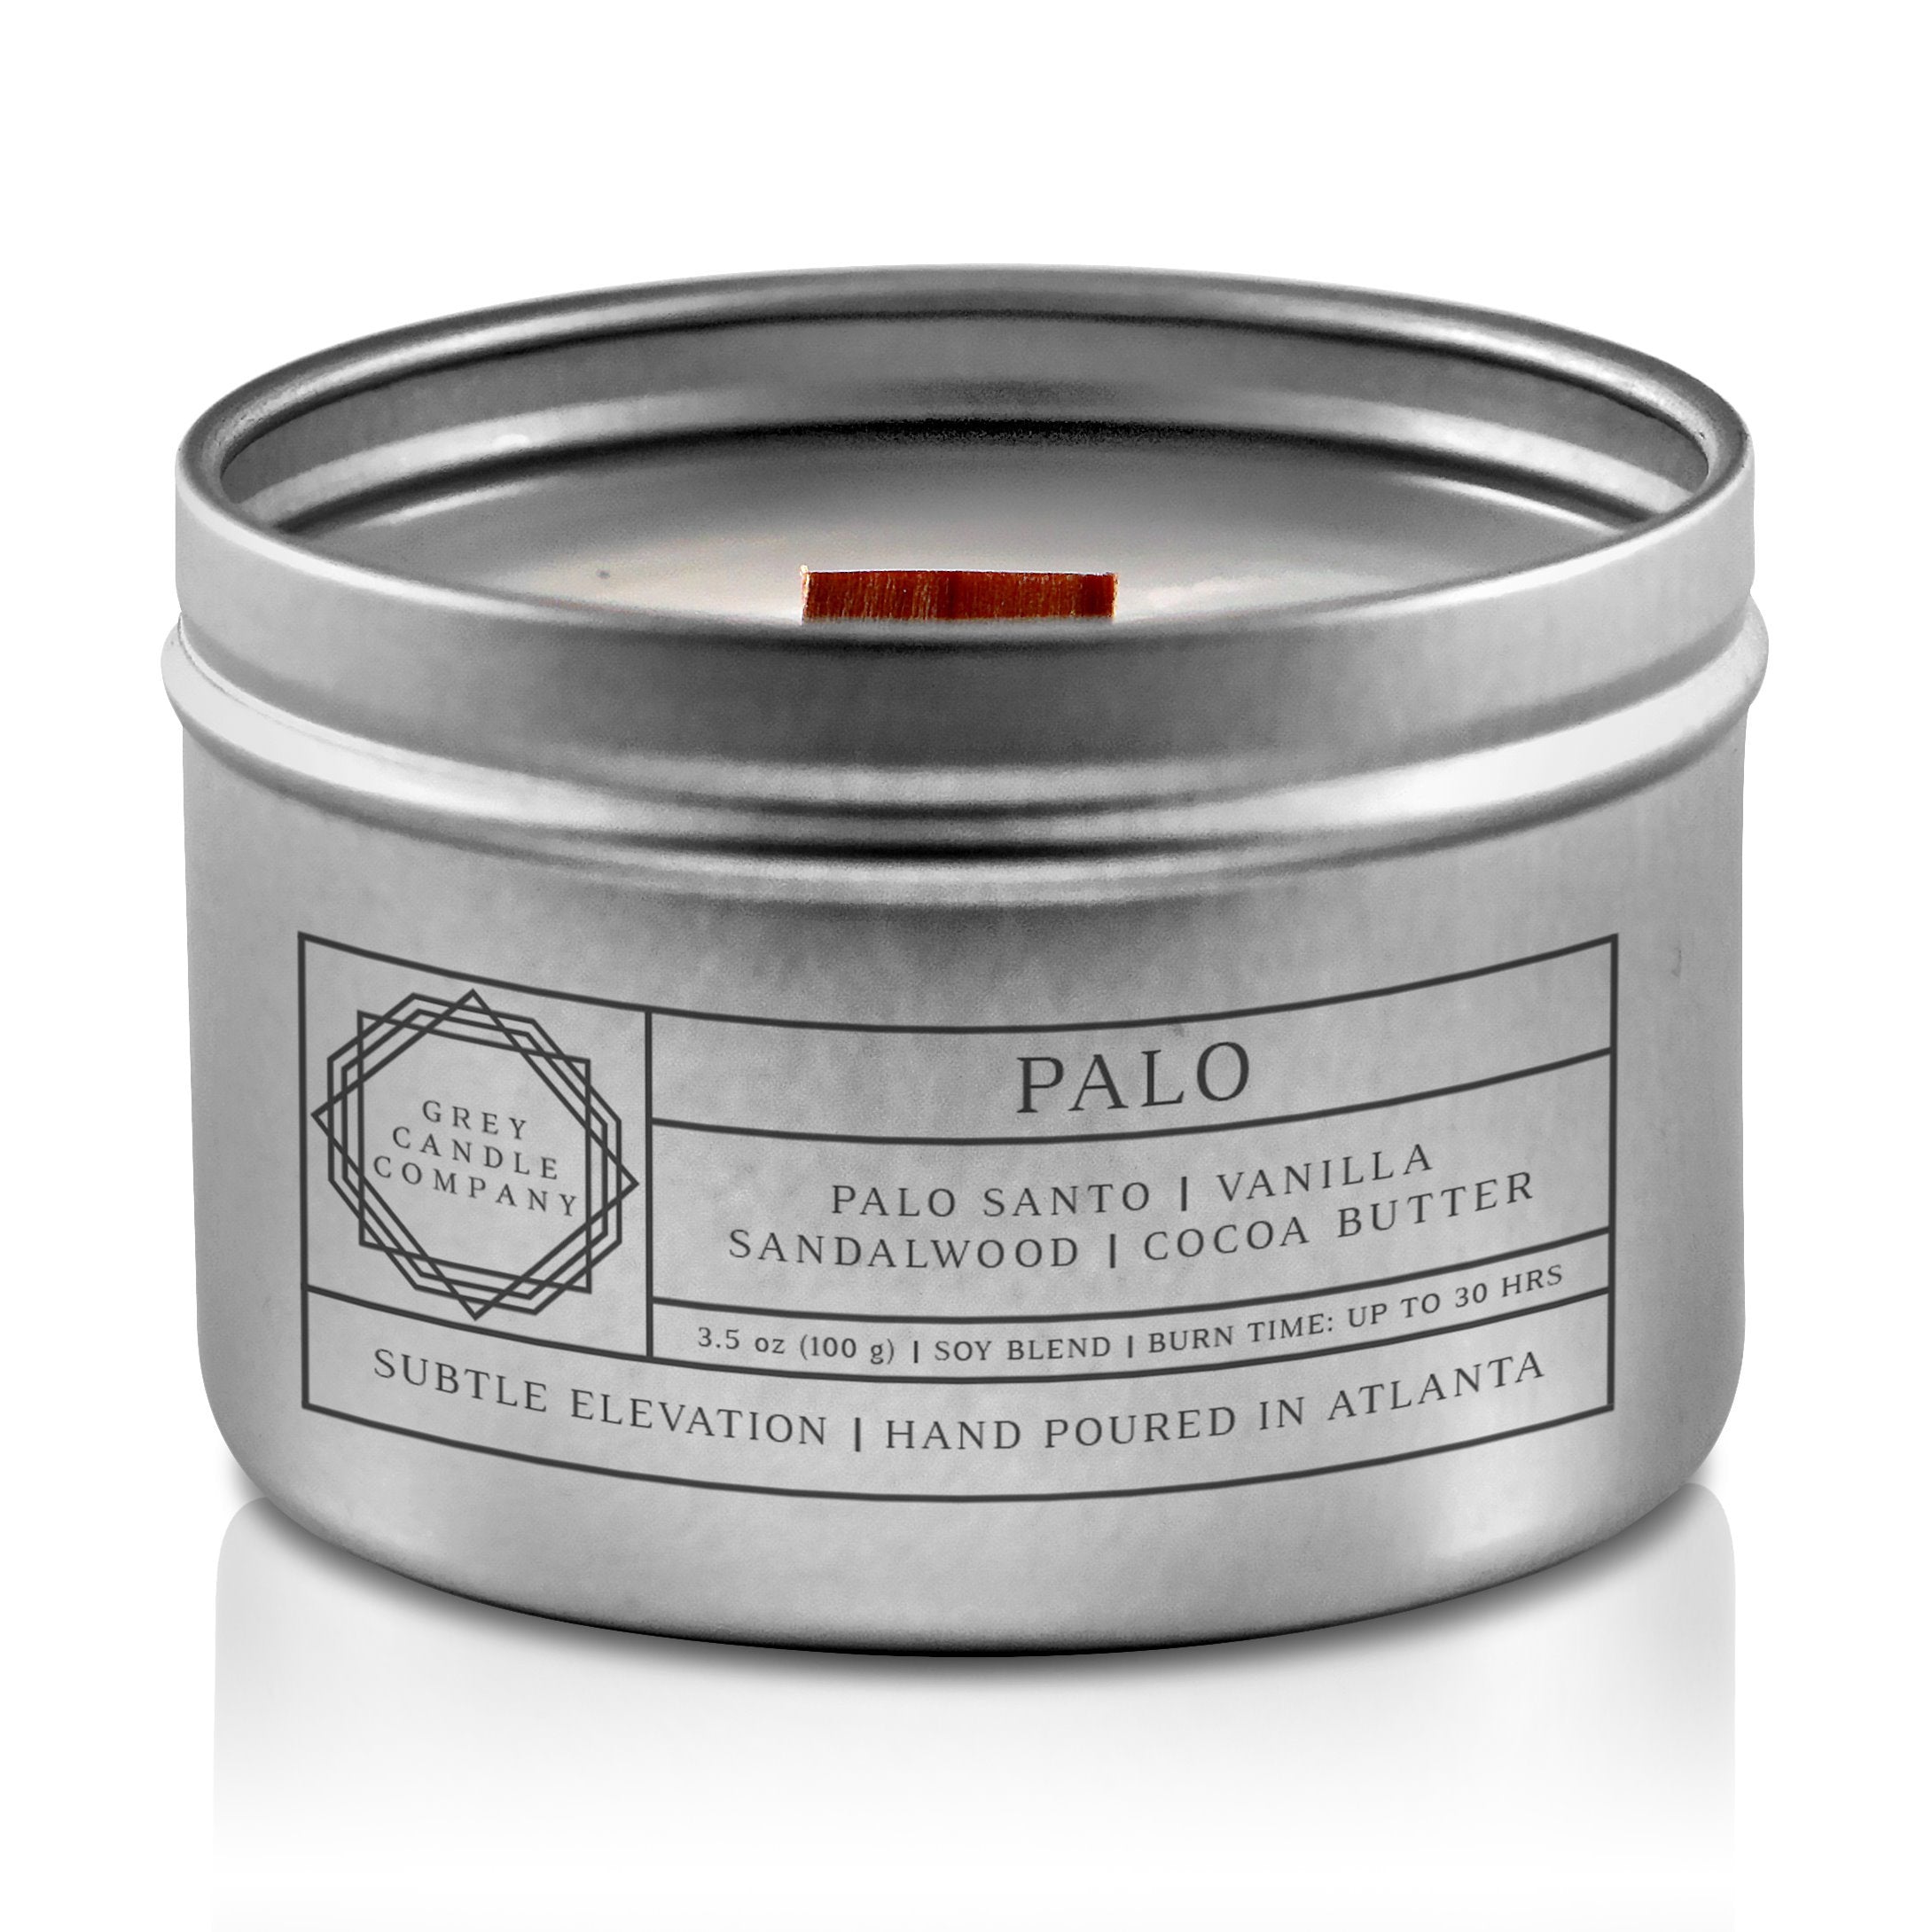 PALO CANDLES Grey Candle Company 3.5 oz. TIN 